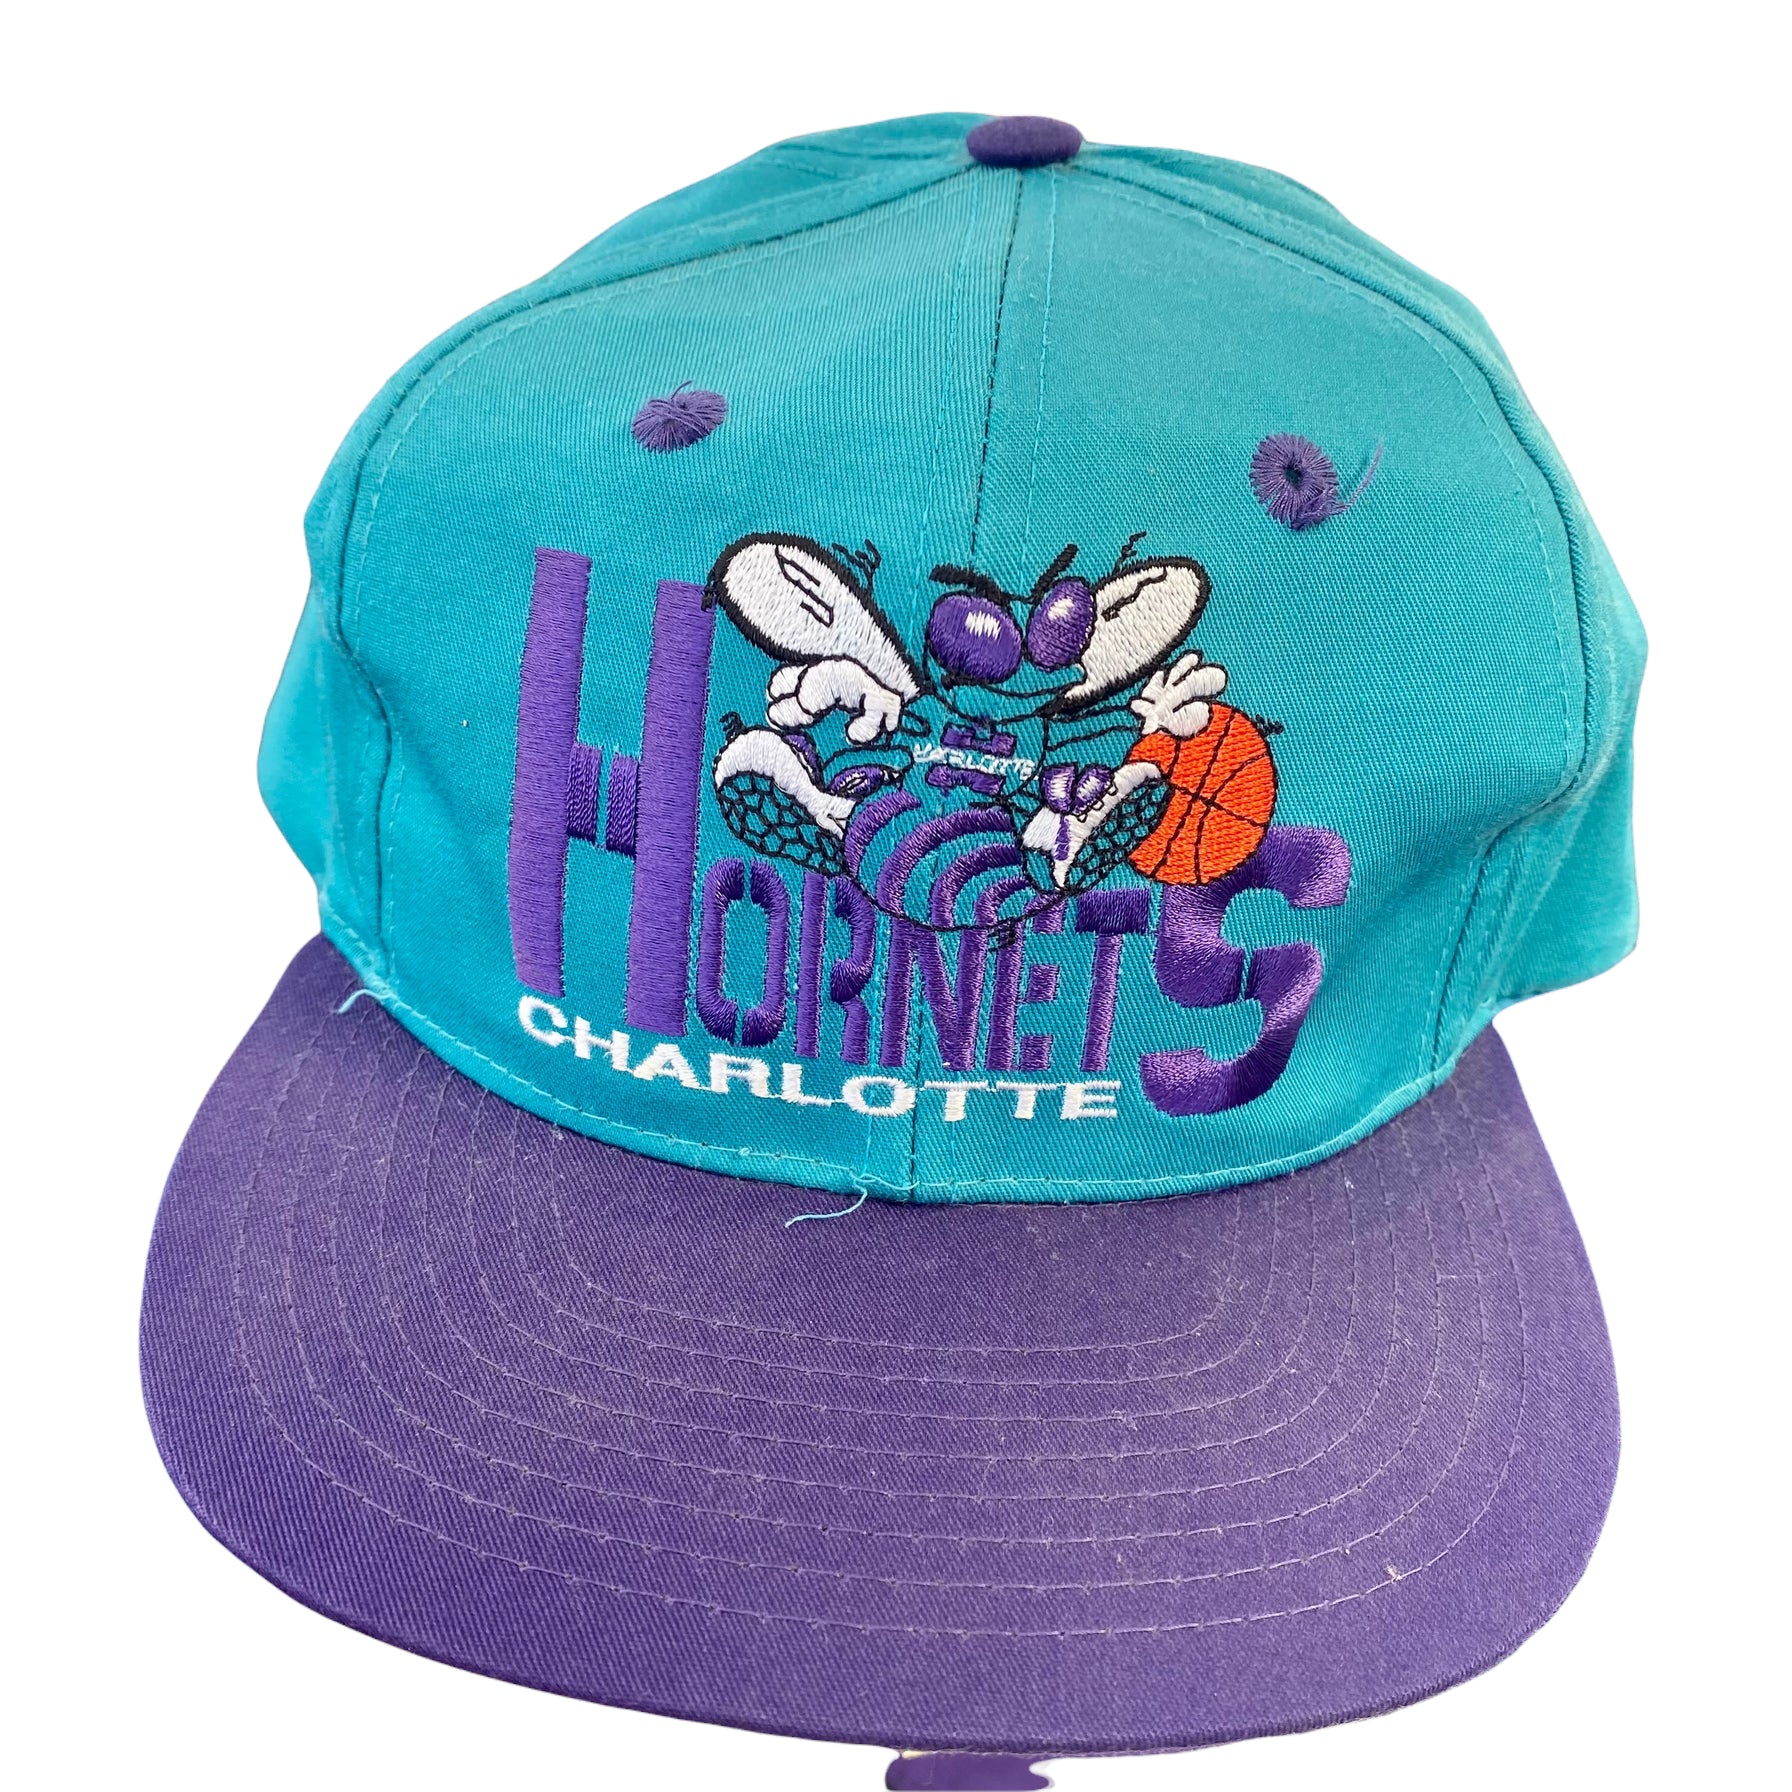 90s CHARLOTTE HORNETS Snapback / Vintage NBA Sports Cap / 